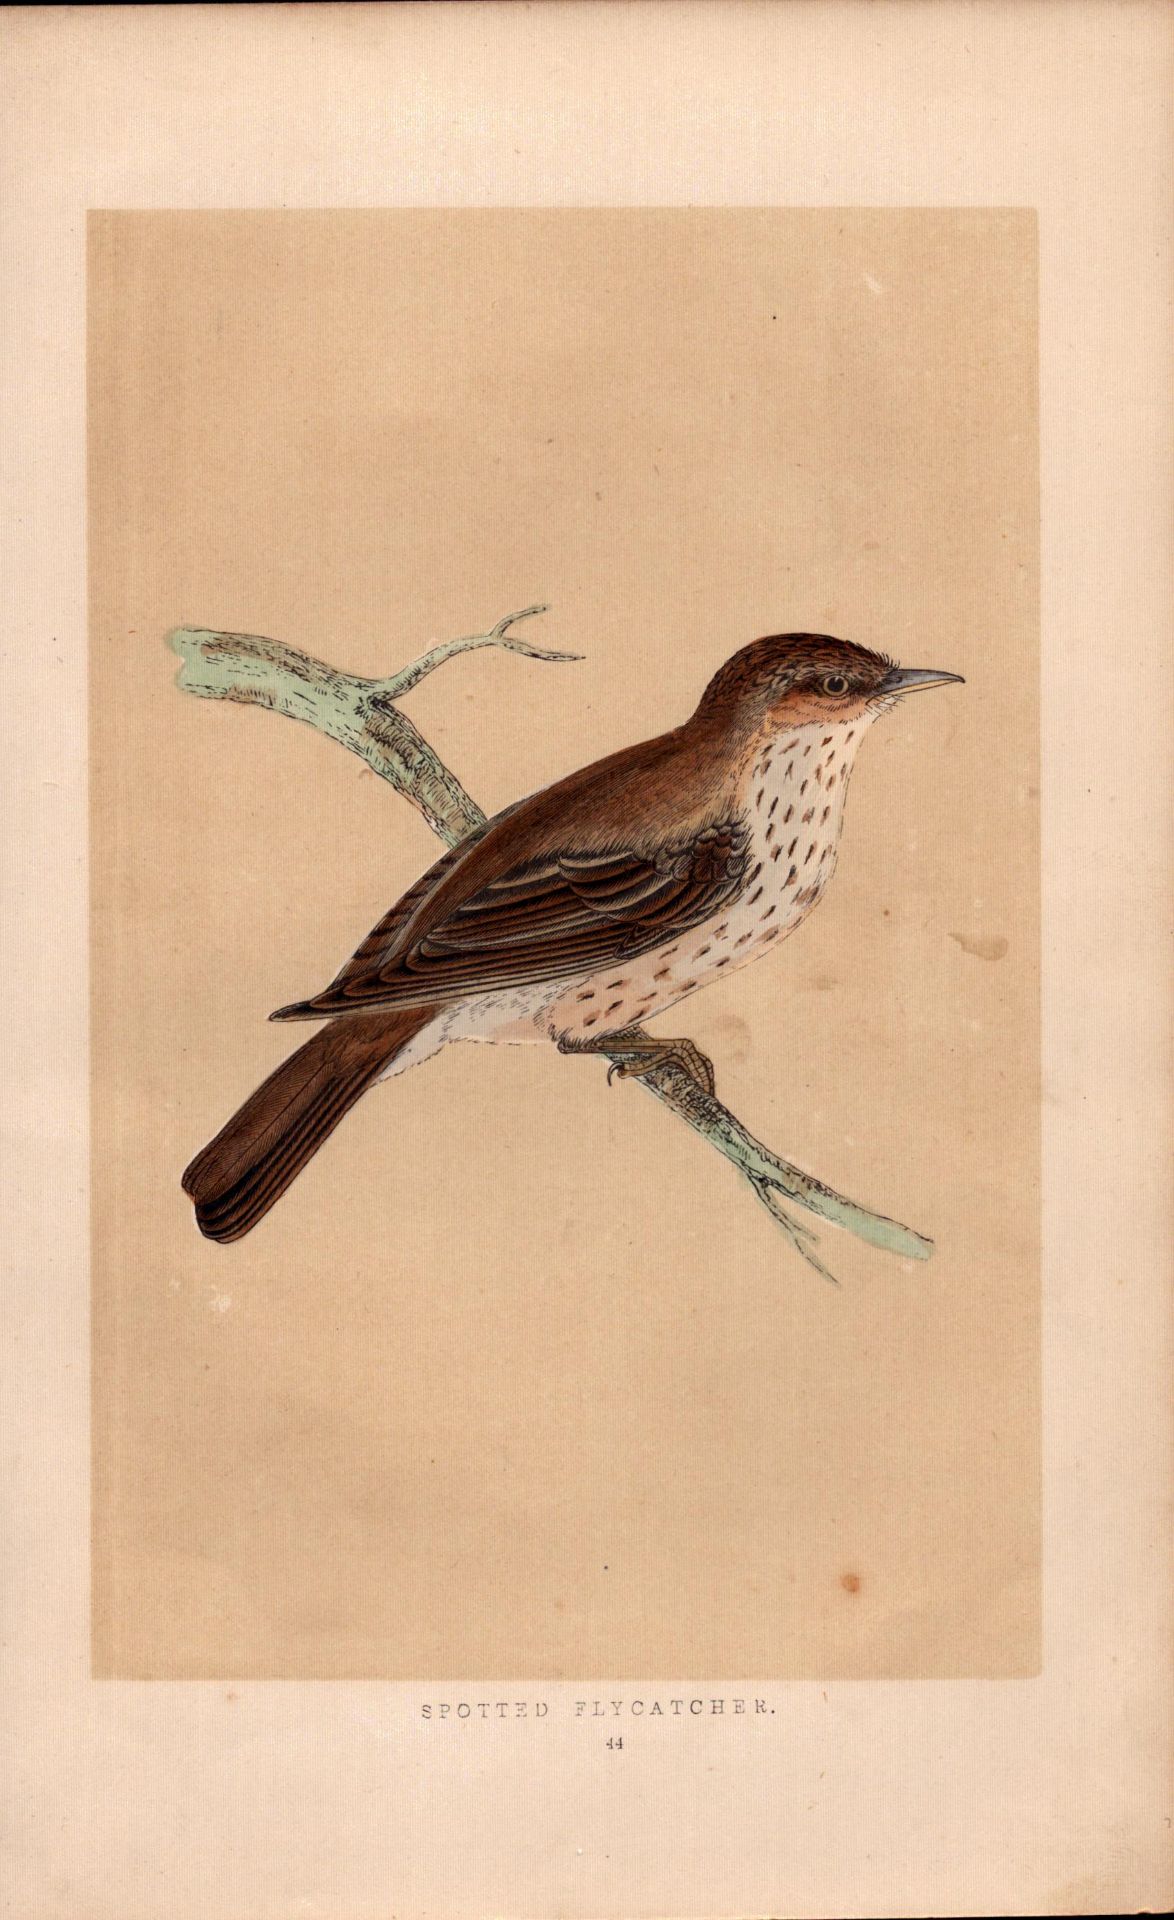 Spotted Flycatcher Rev Morris Antique History of British Birds Engraving.